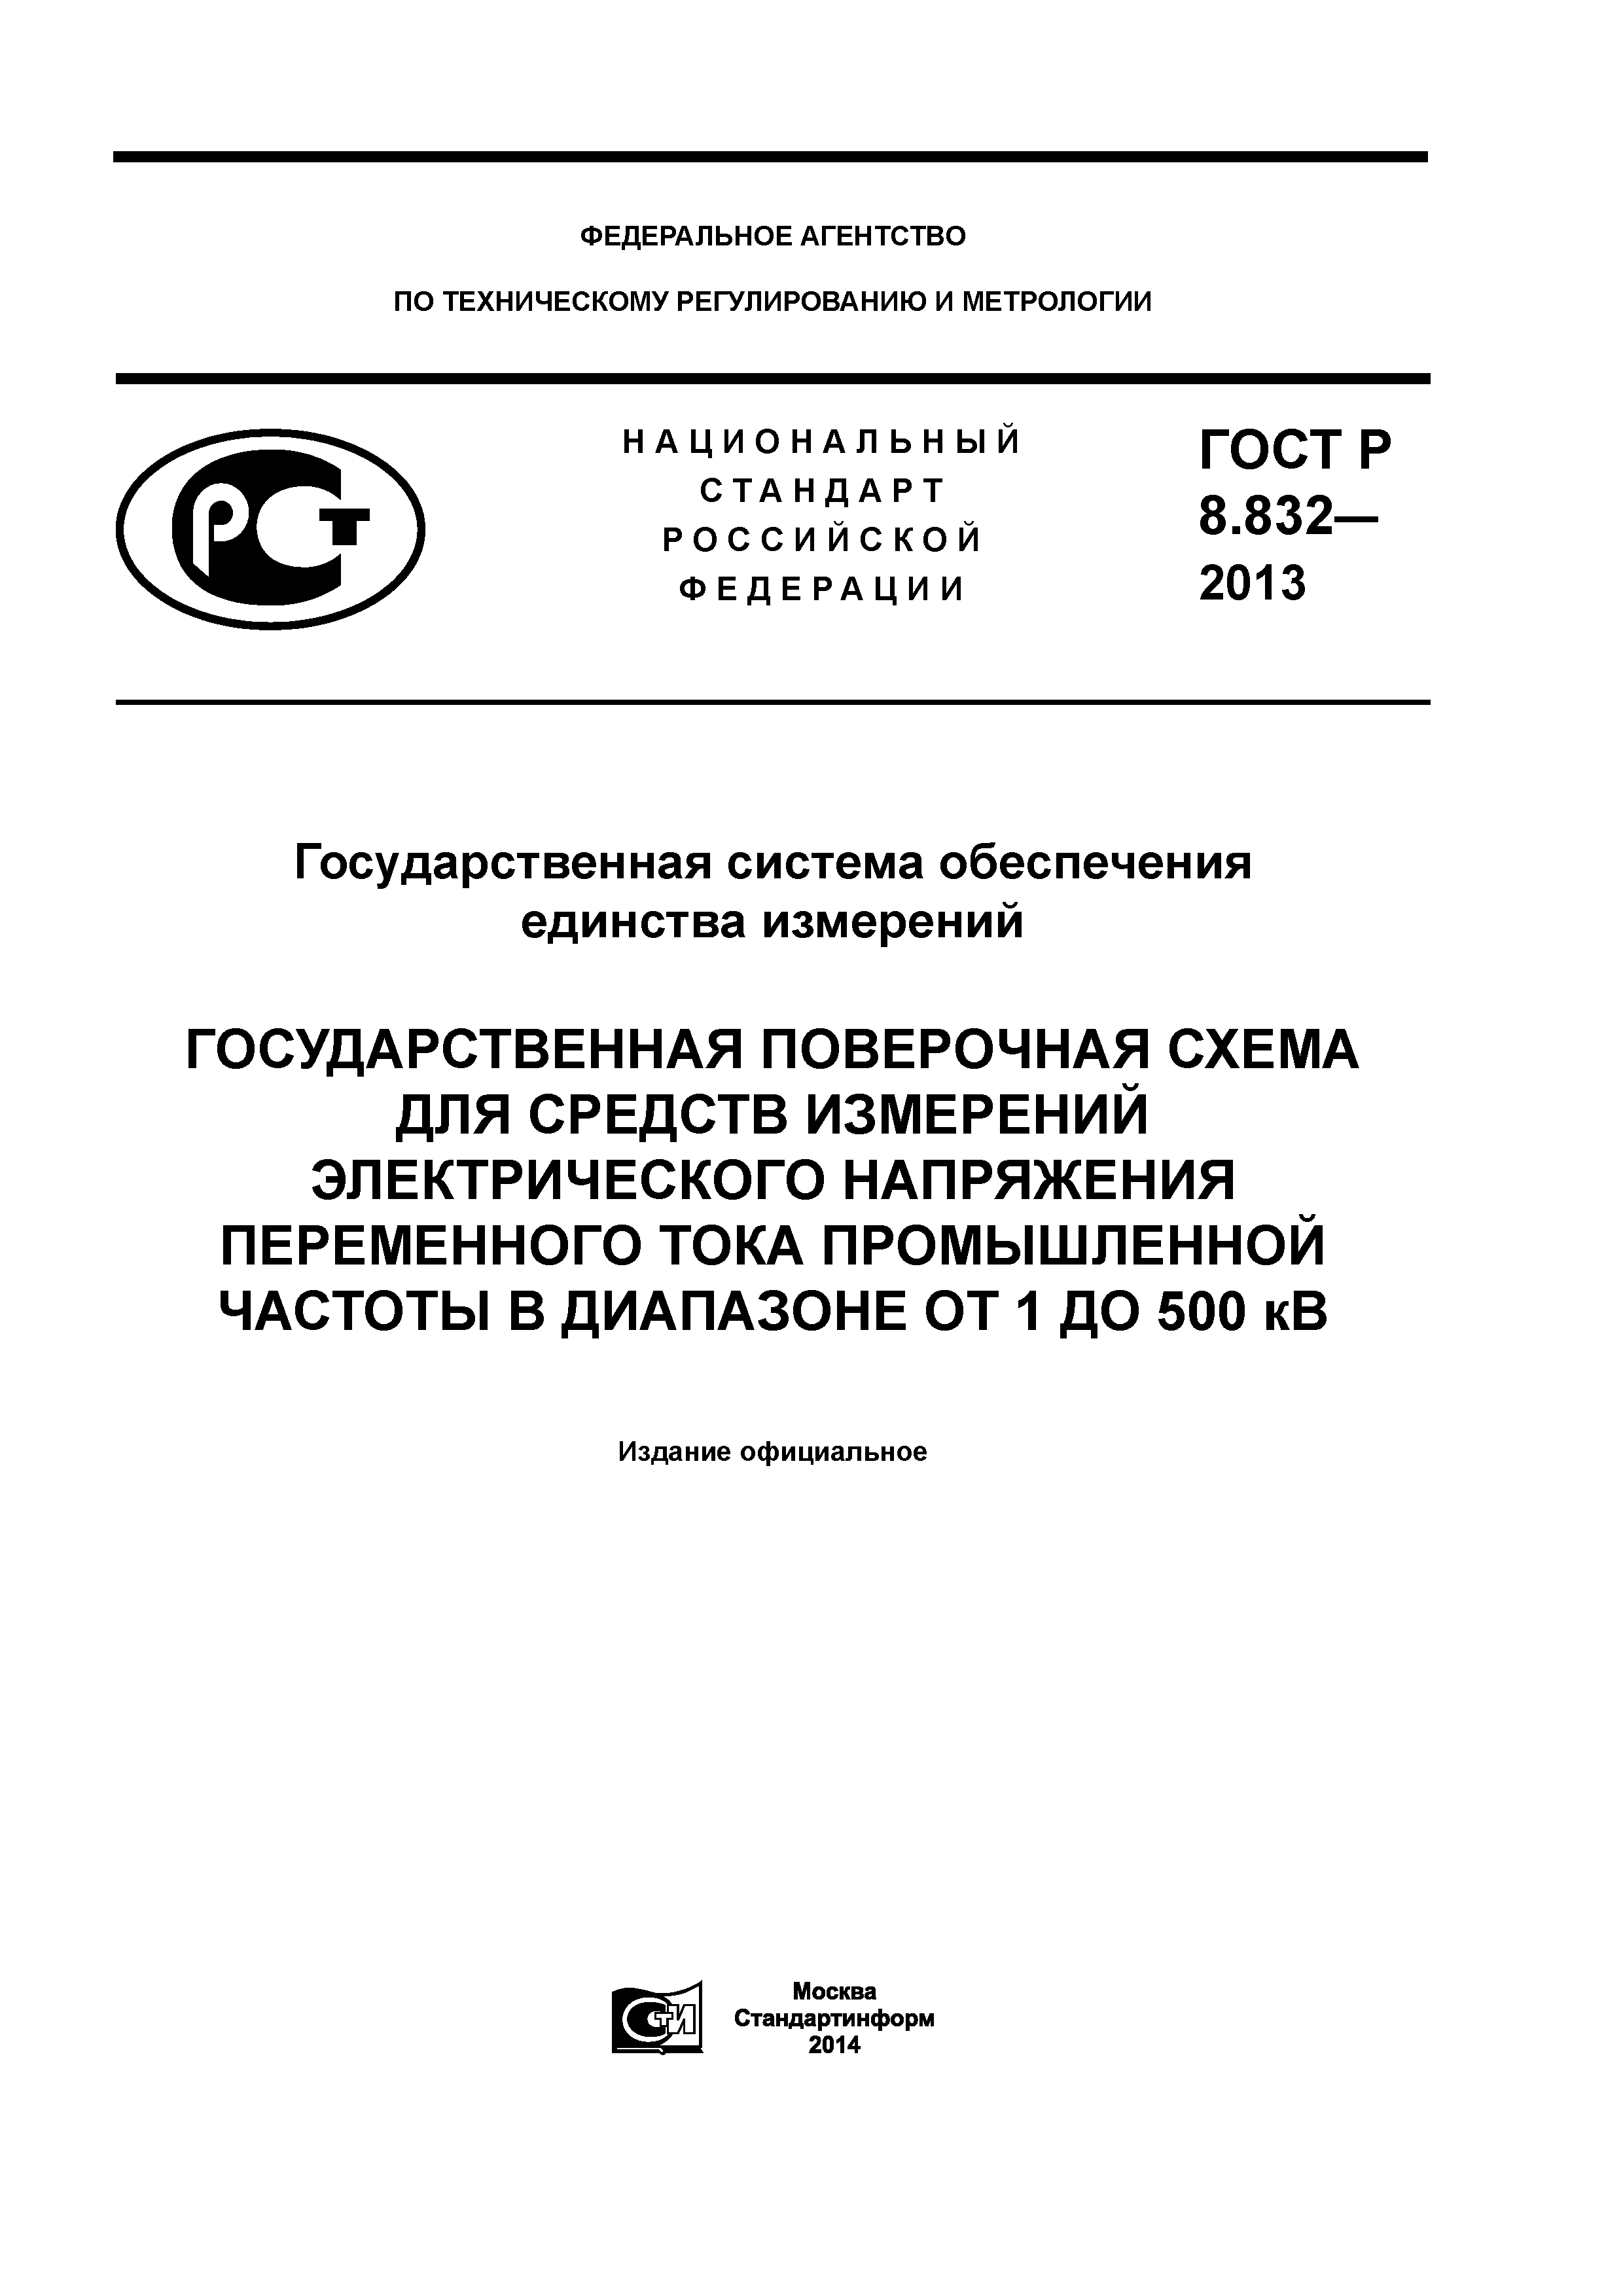 ГОСТ Р 8.832-2013